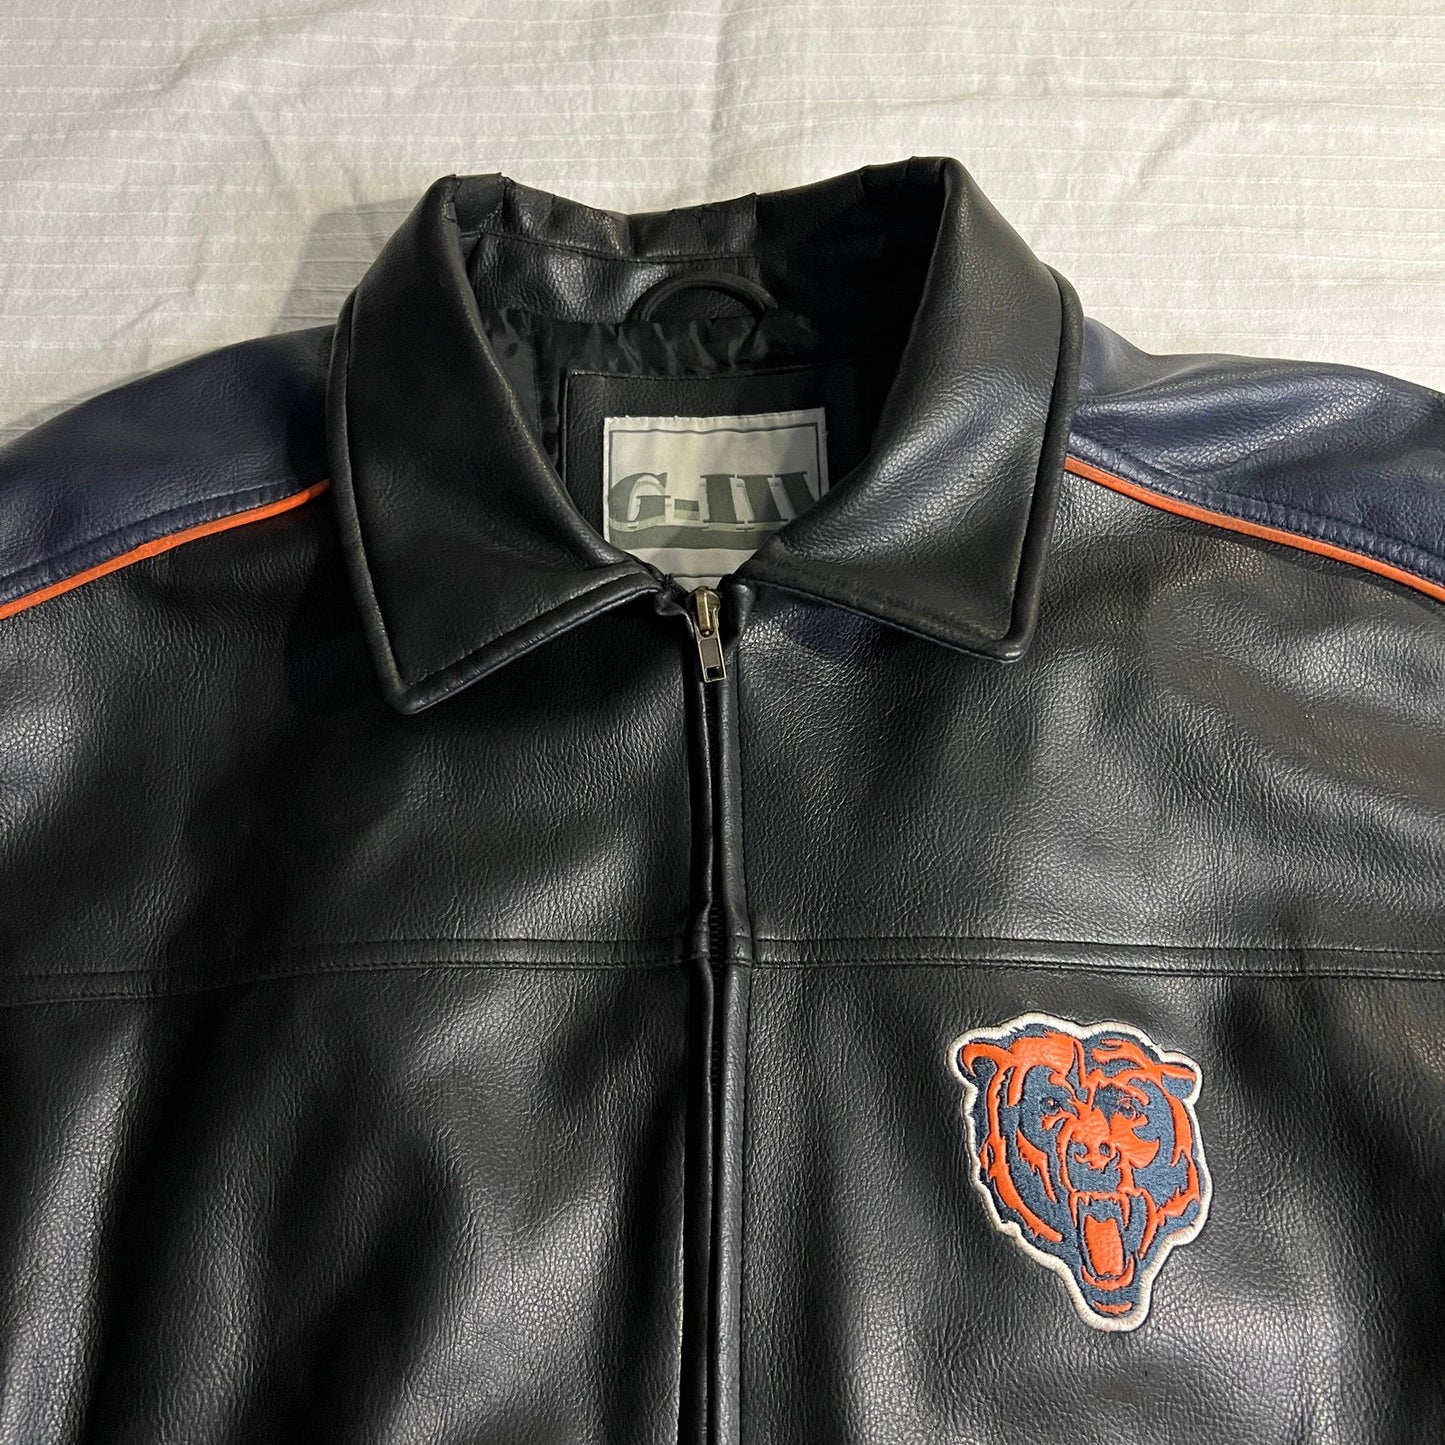 Chicago Bears Jacket Mens XL G-III Full Zip NFL Black Polyvinyl Embroidered